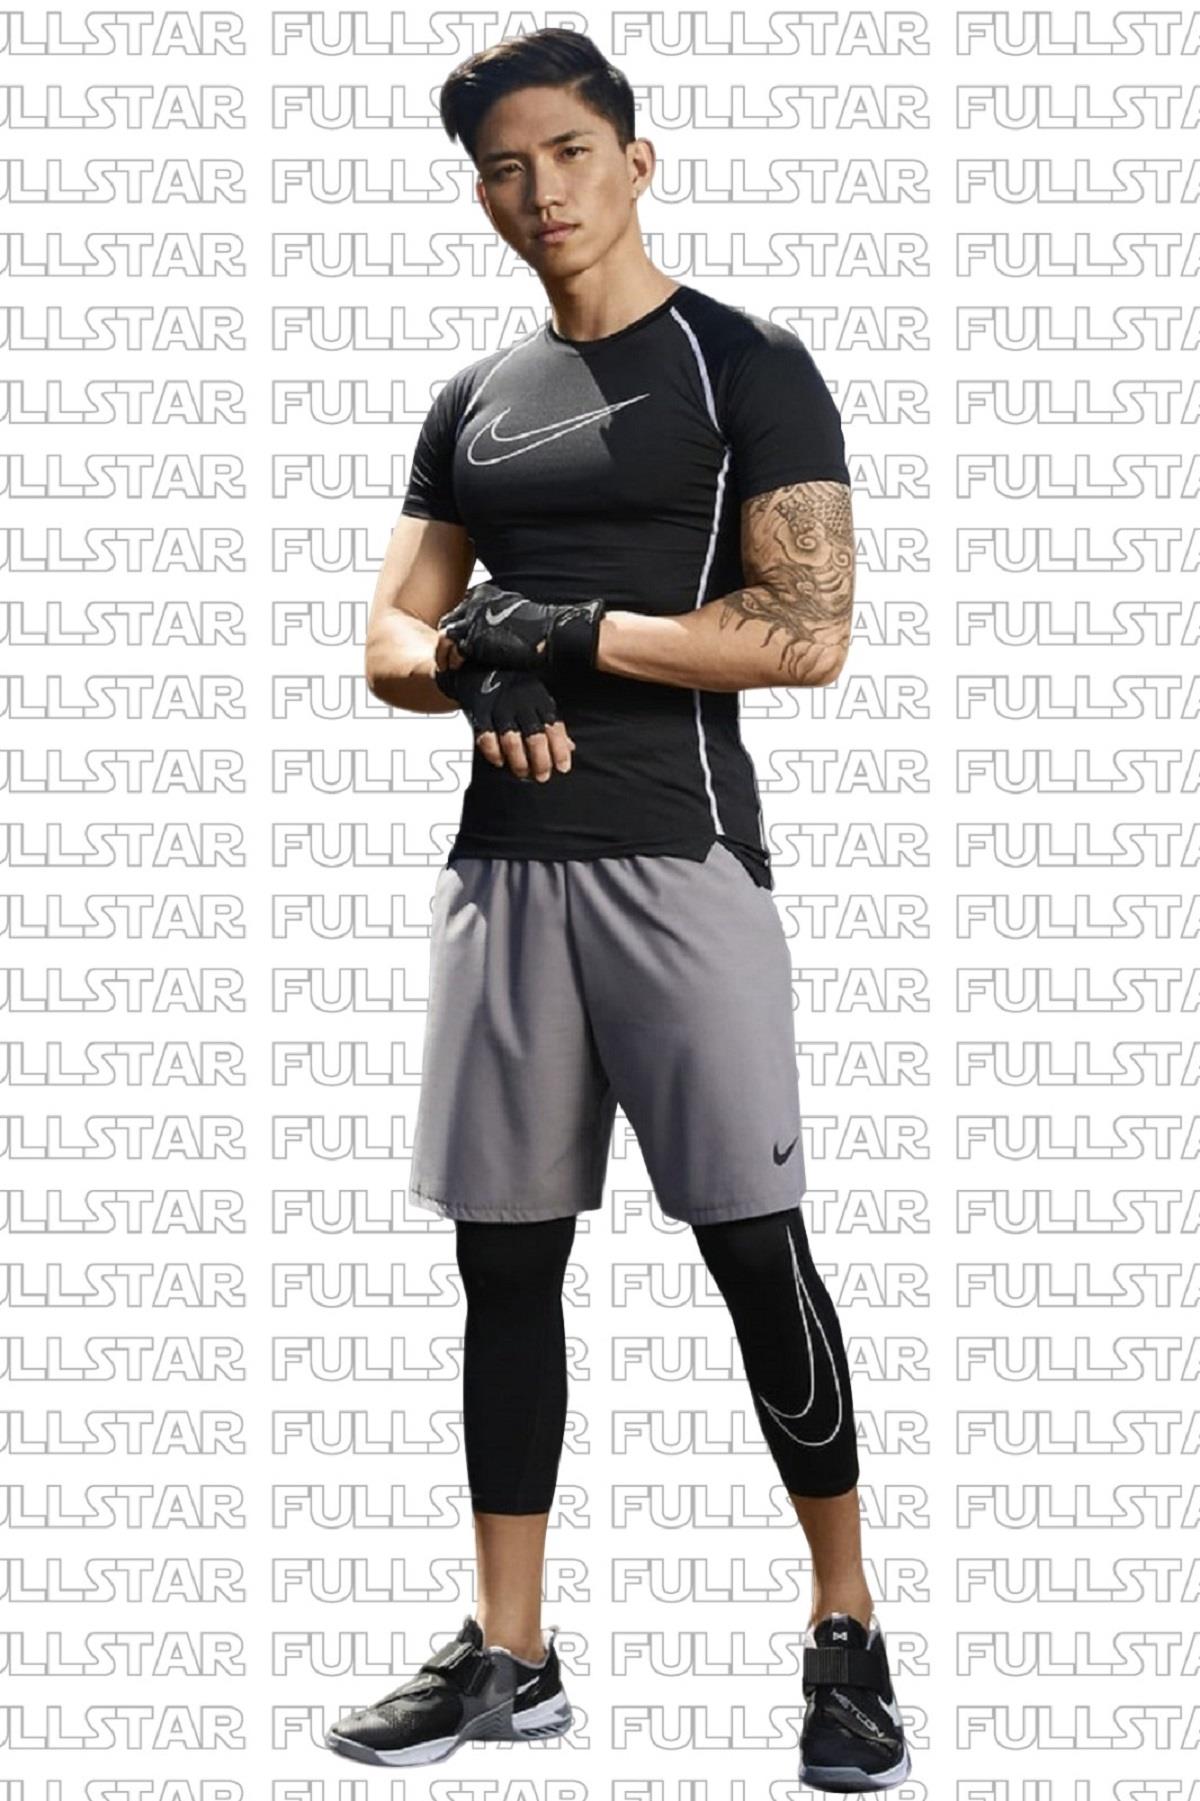 Nike Pro Dri Fit Men's Tight Fit Short Sleeve Top Slim Fit Body